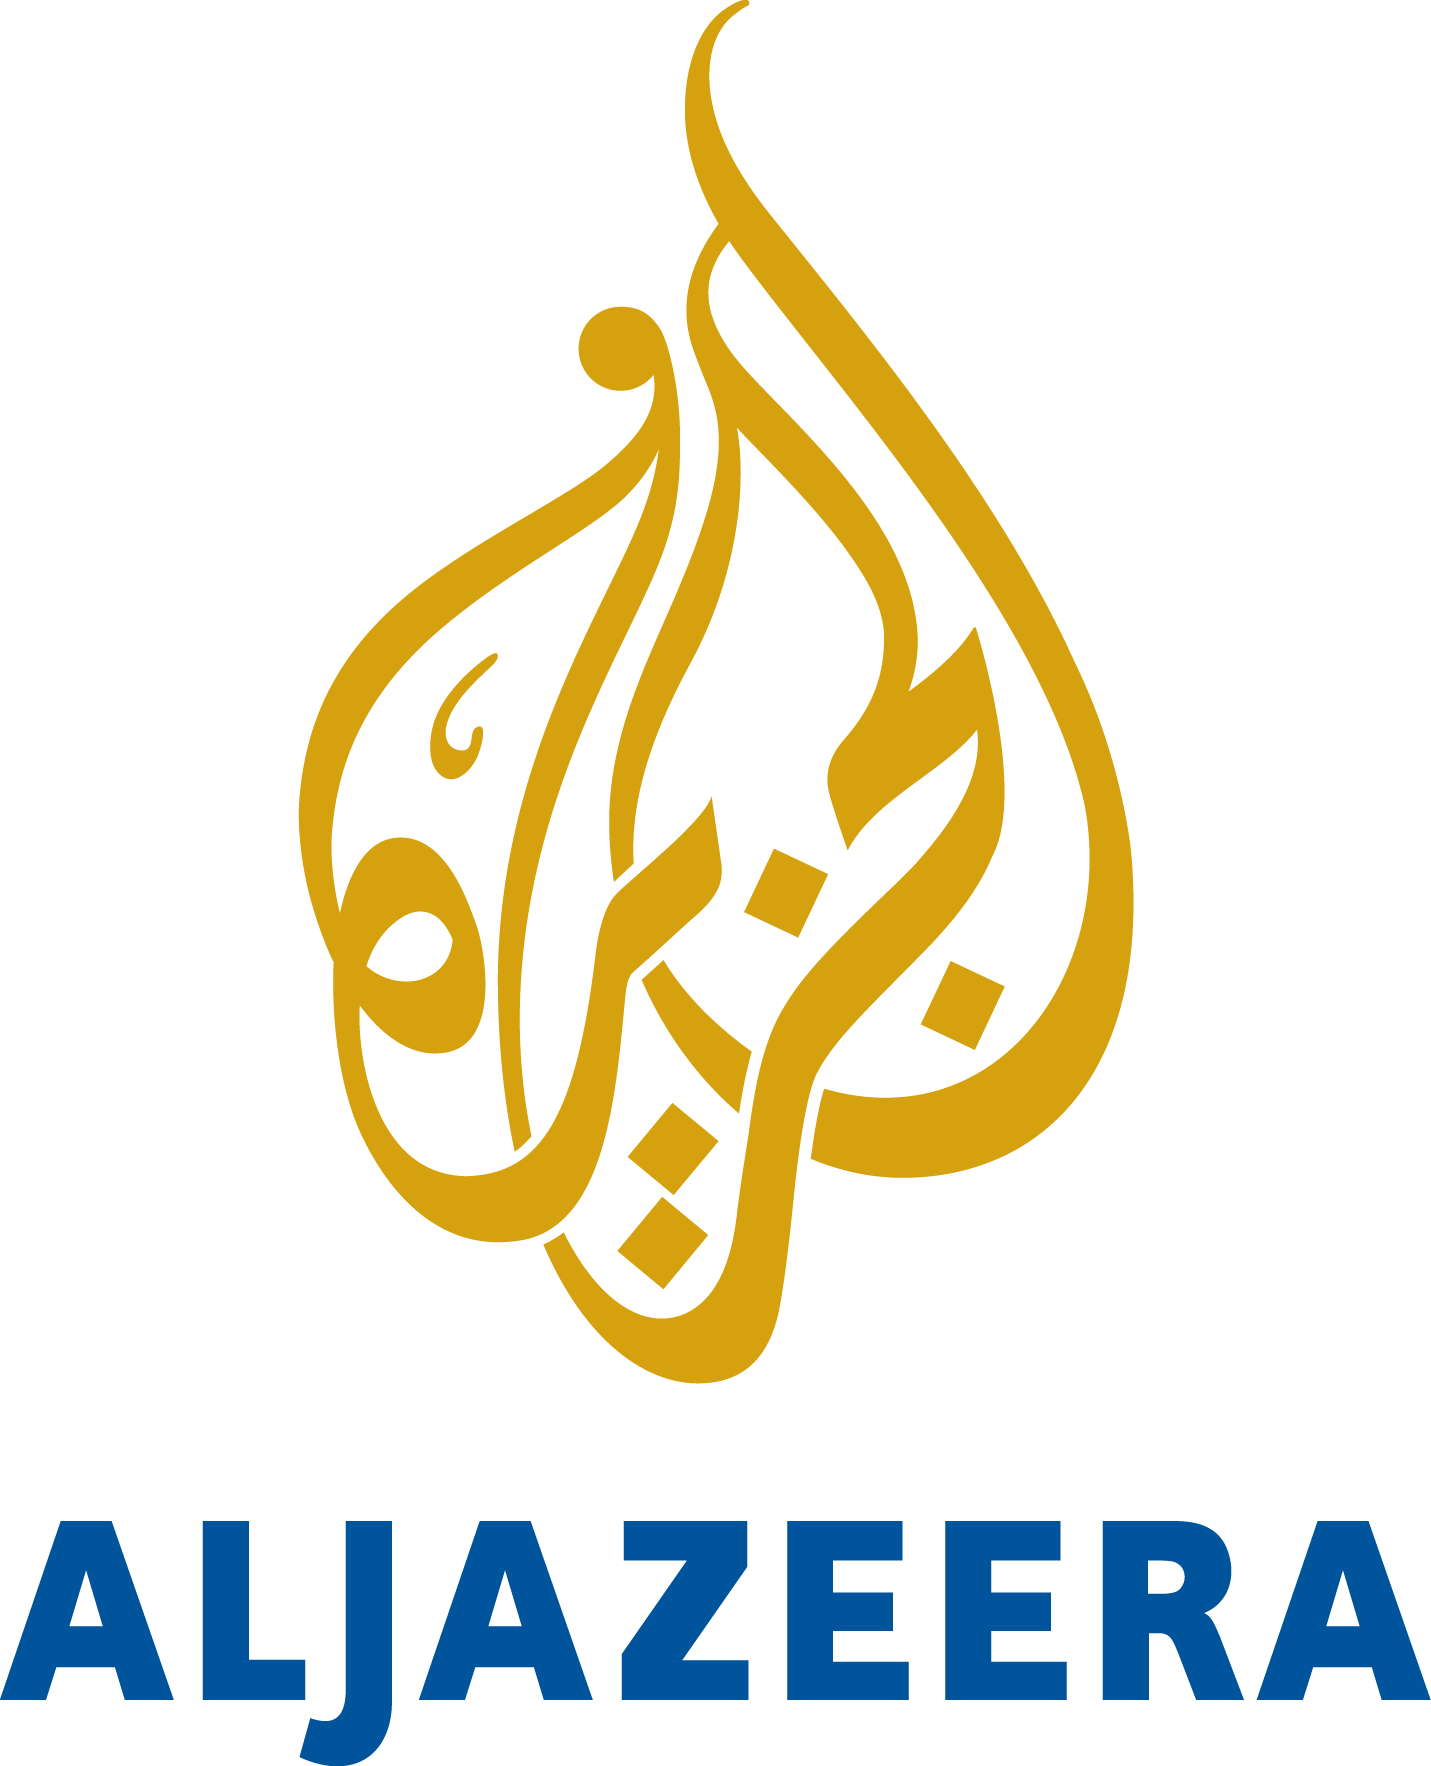 Al Jazeera Logo Vector PNG - 115080